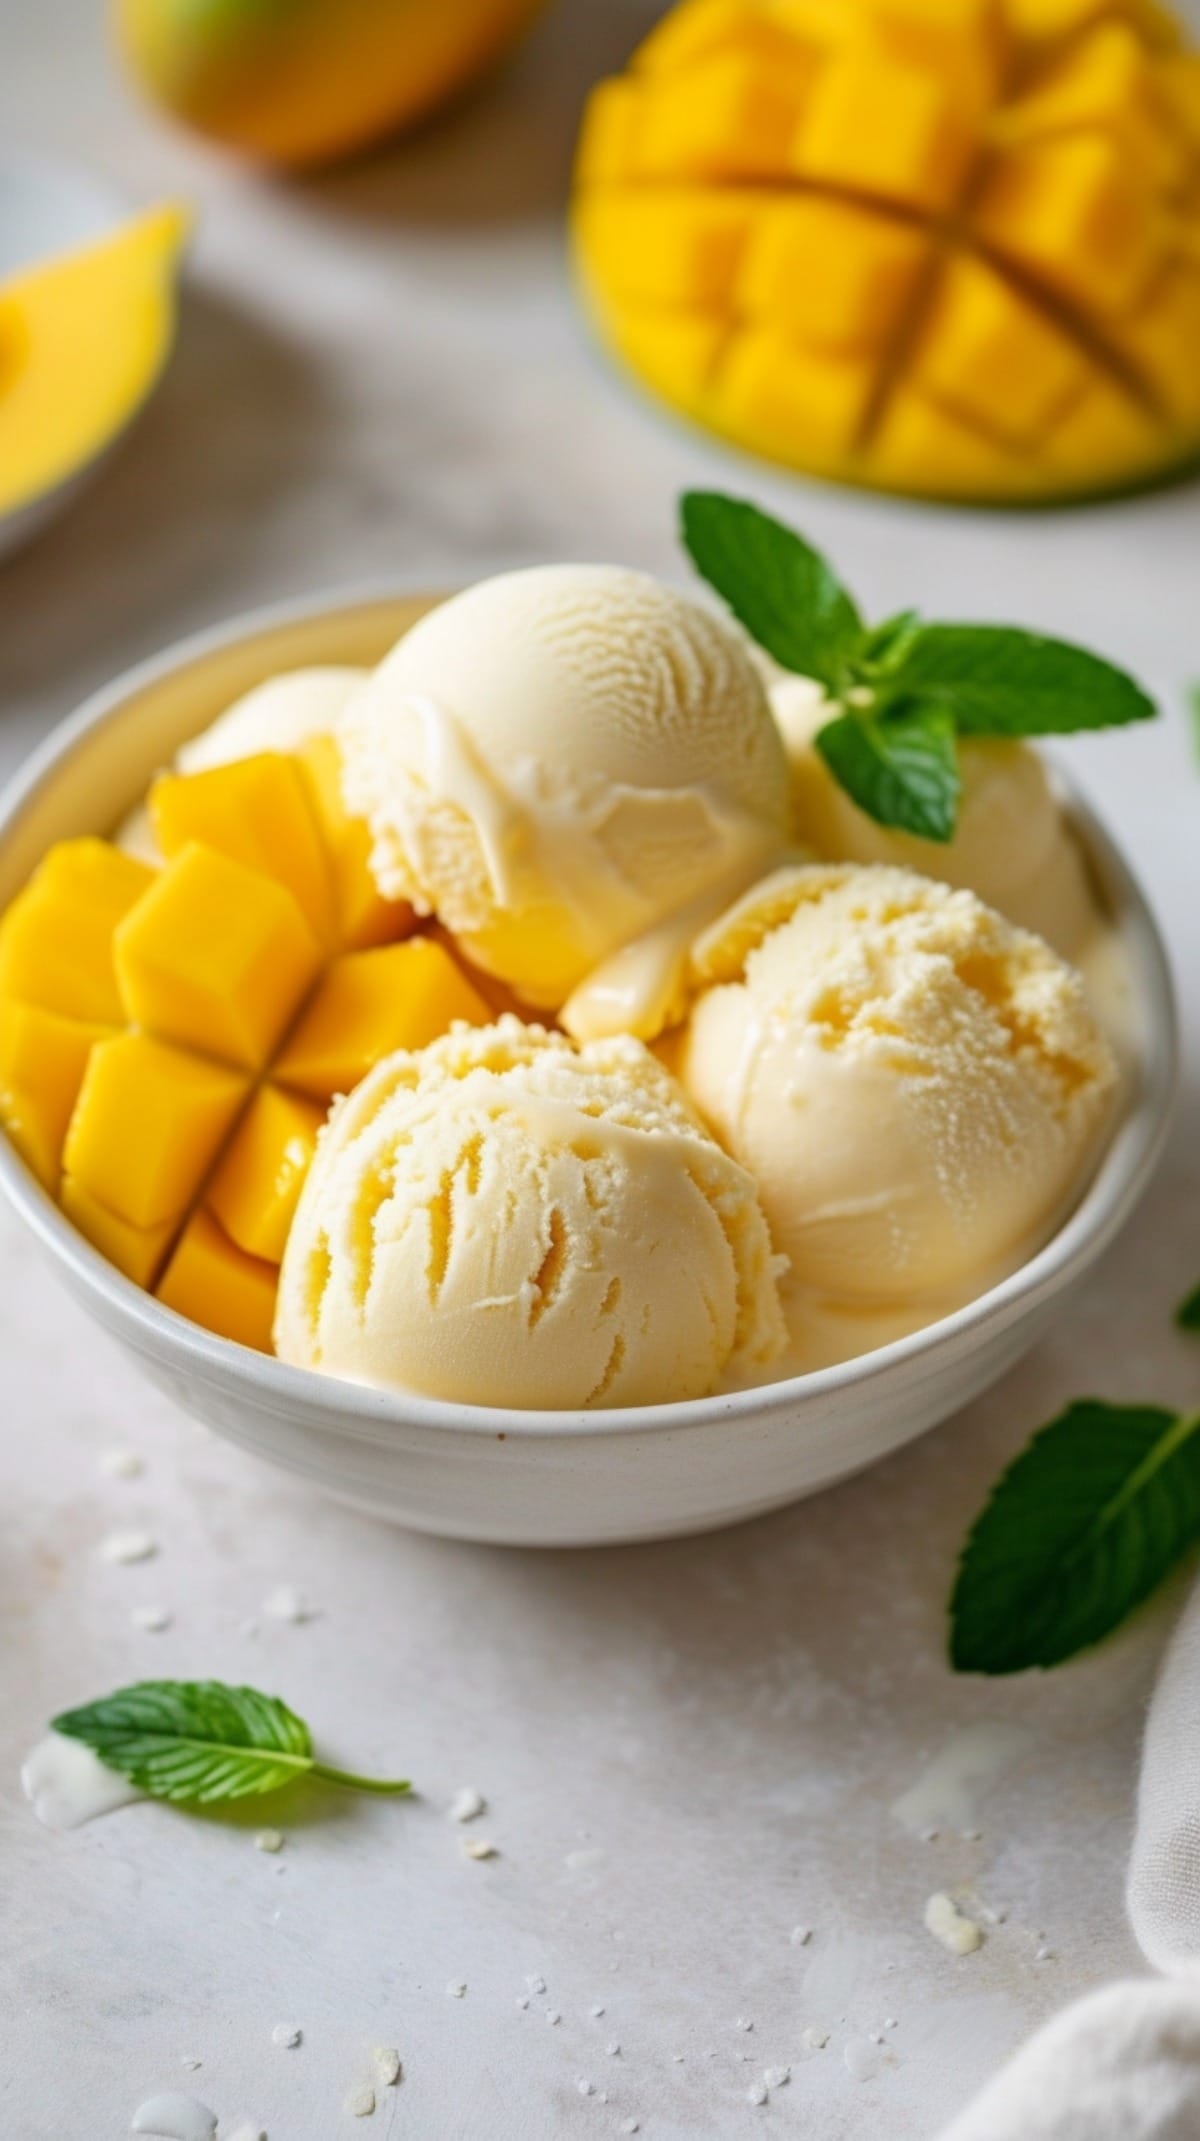 Vanilla ice cream in a bowl with fresh mango